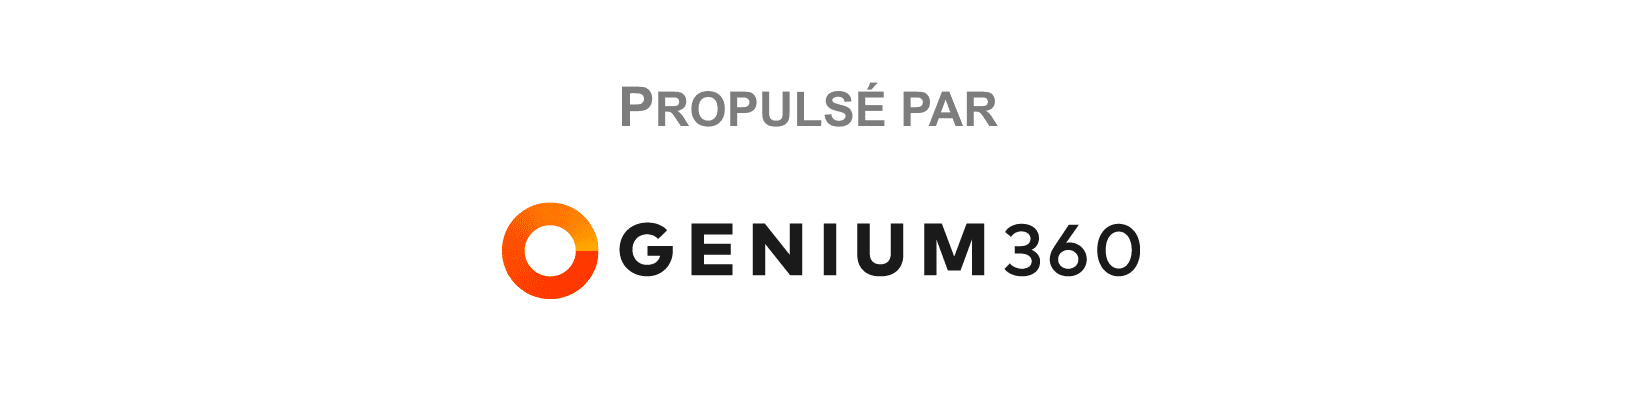 Propulse par Genium (2)